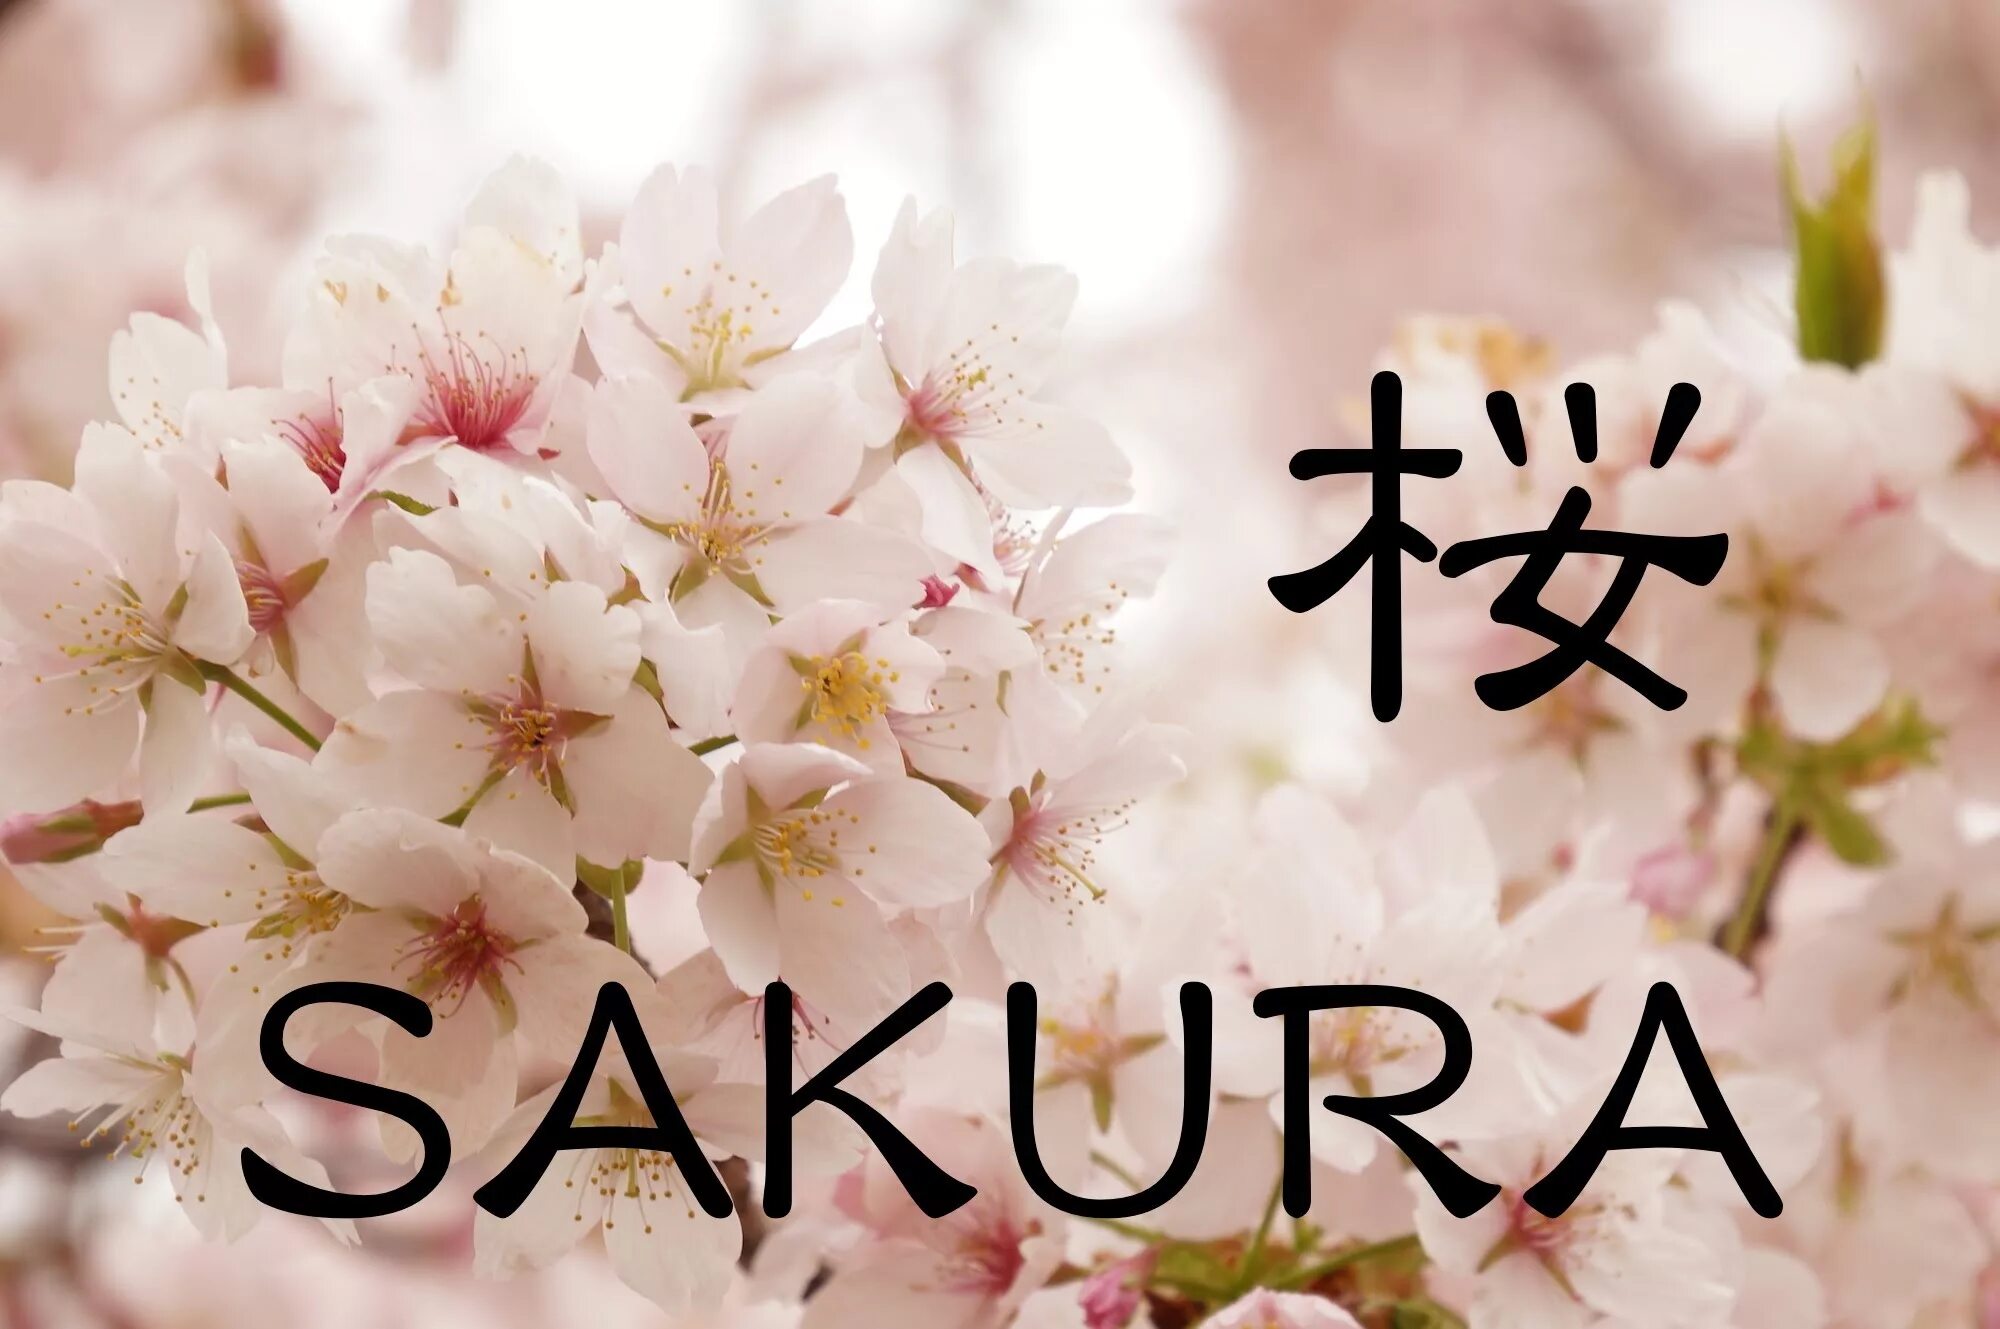 Сакура на английском. Сакура надпись. Сакура имя. Японская Сакура. Иероглиф Сакура.